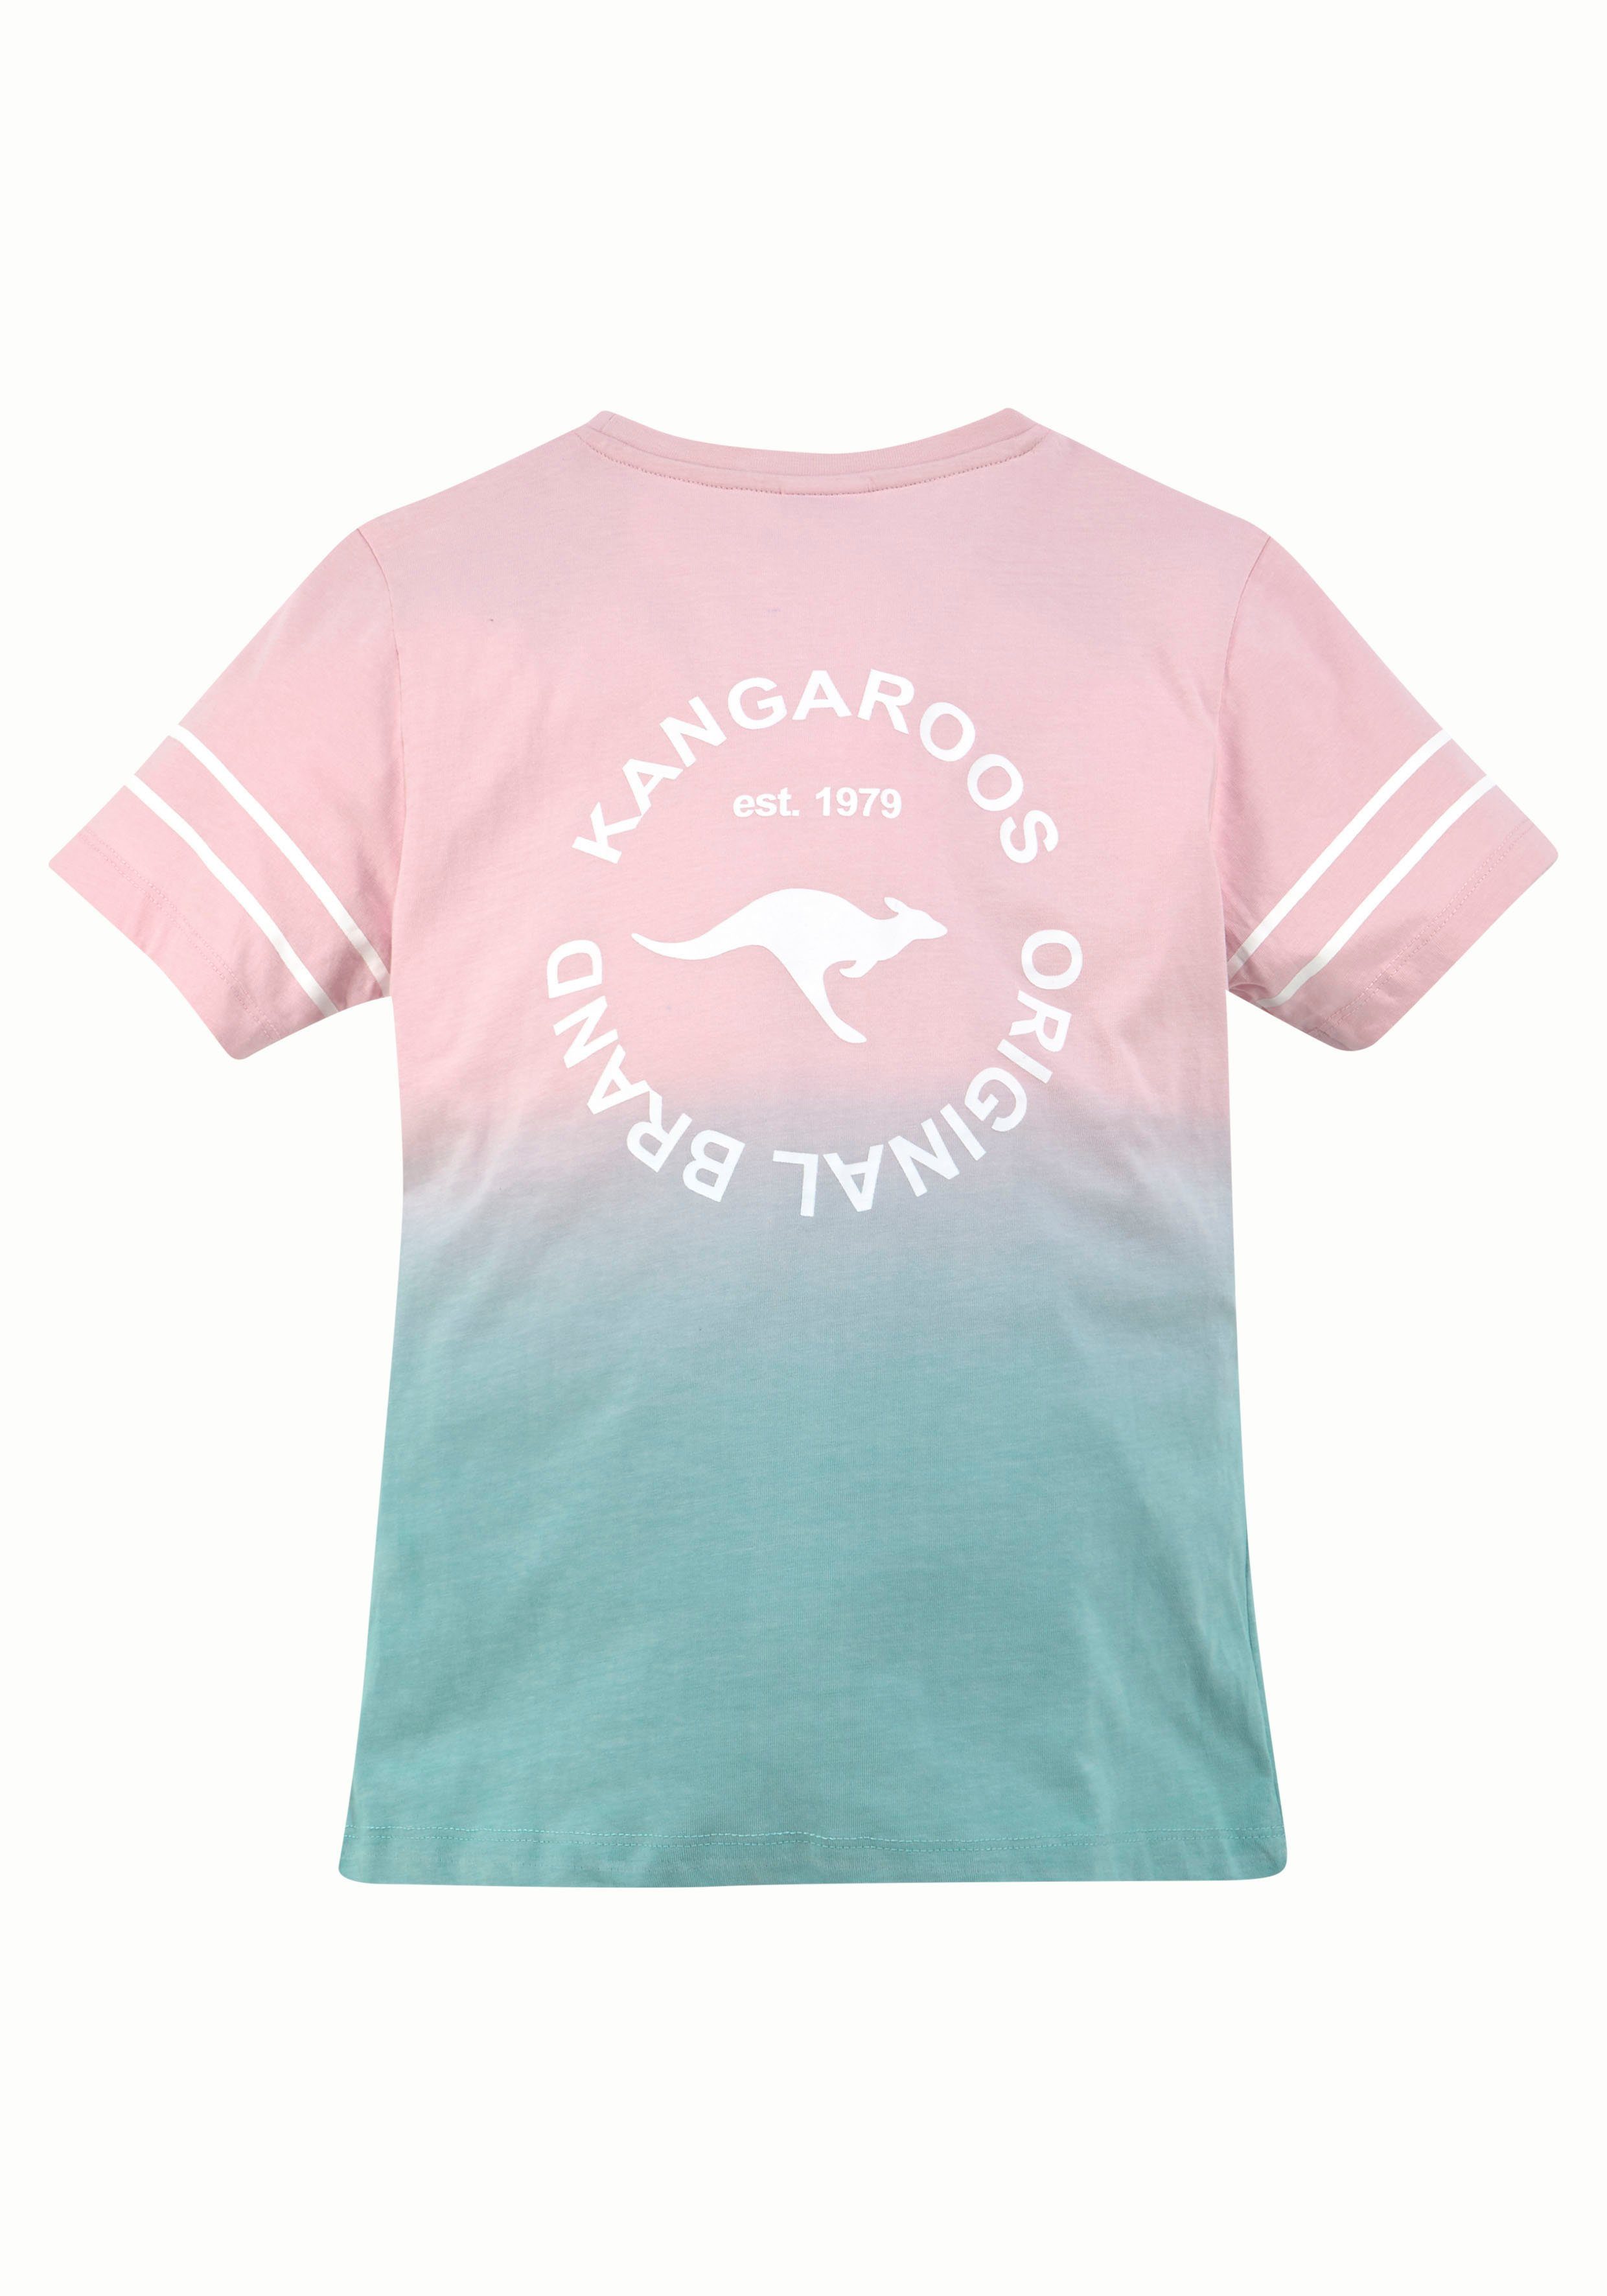 KangaROOS T-Shirt in Weite bequemer